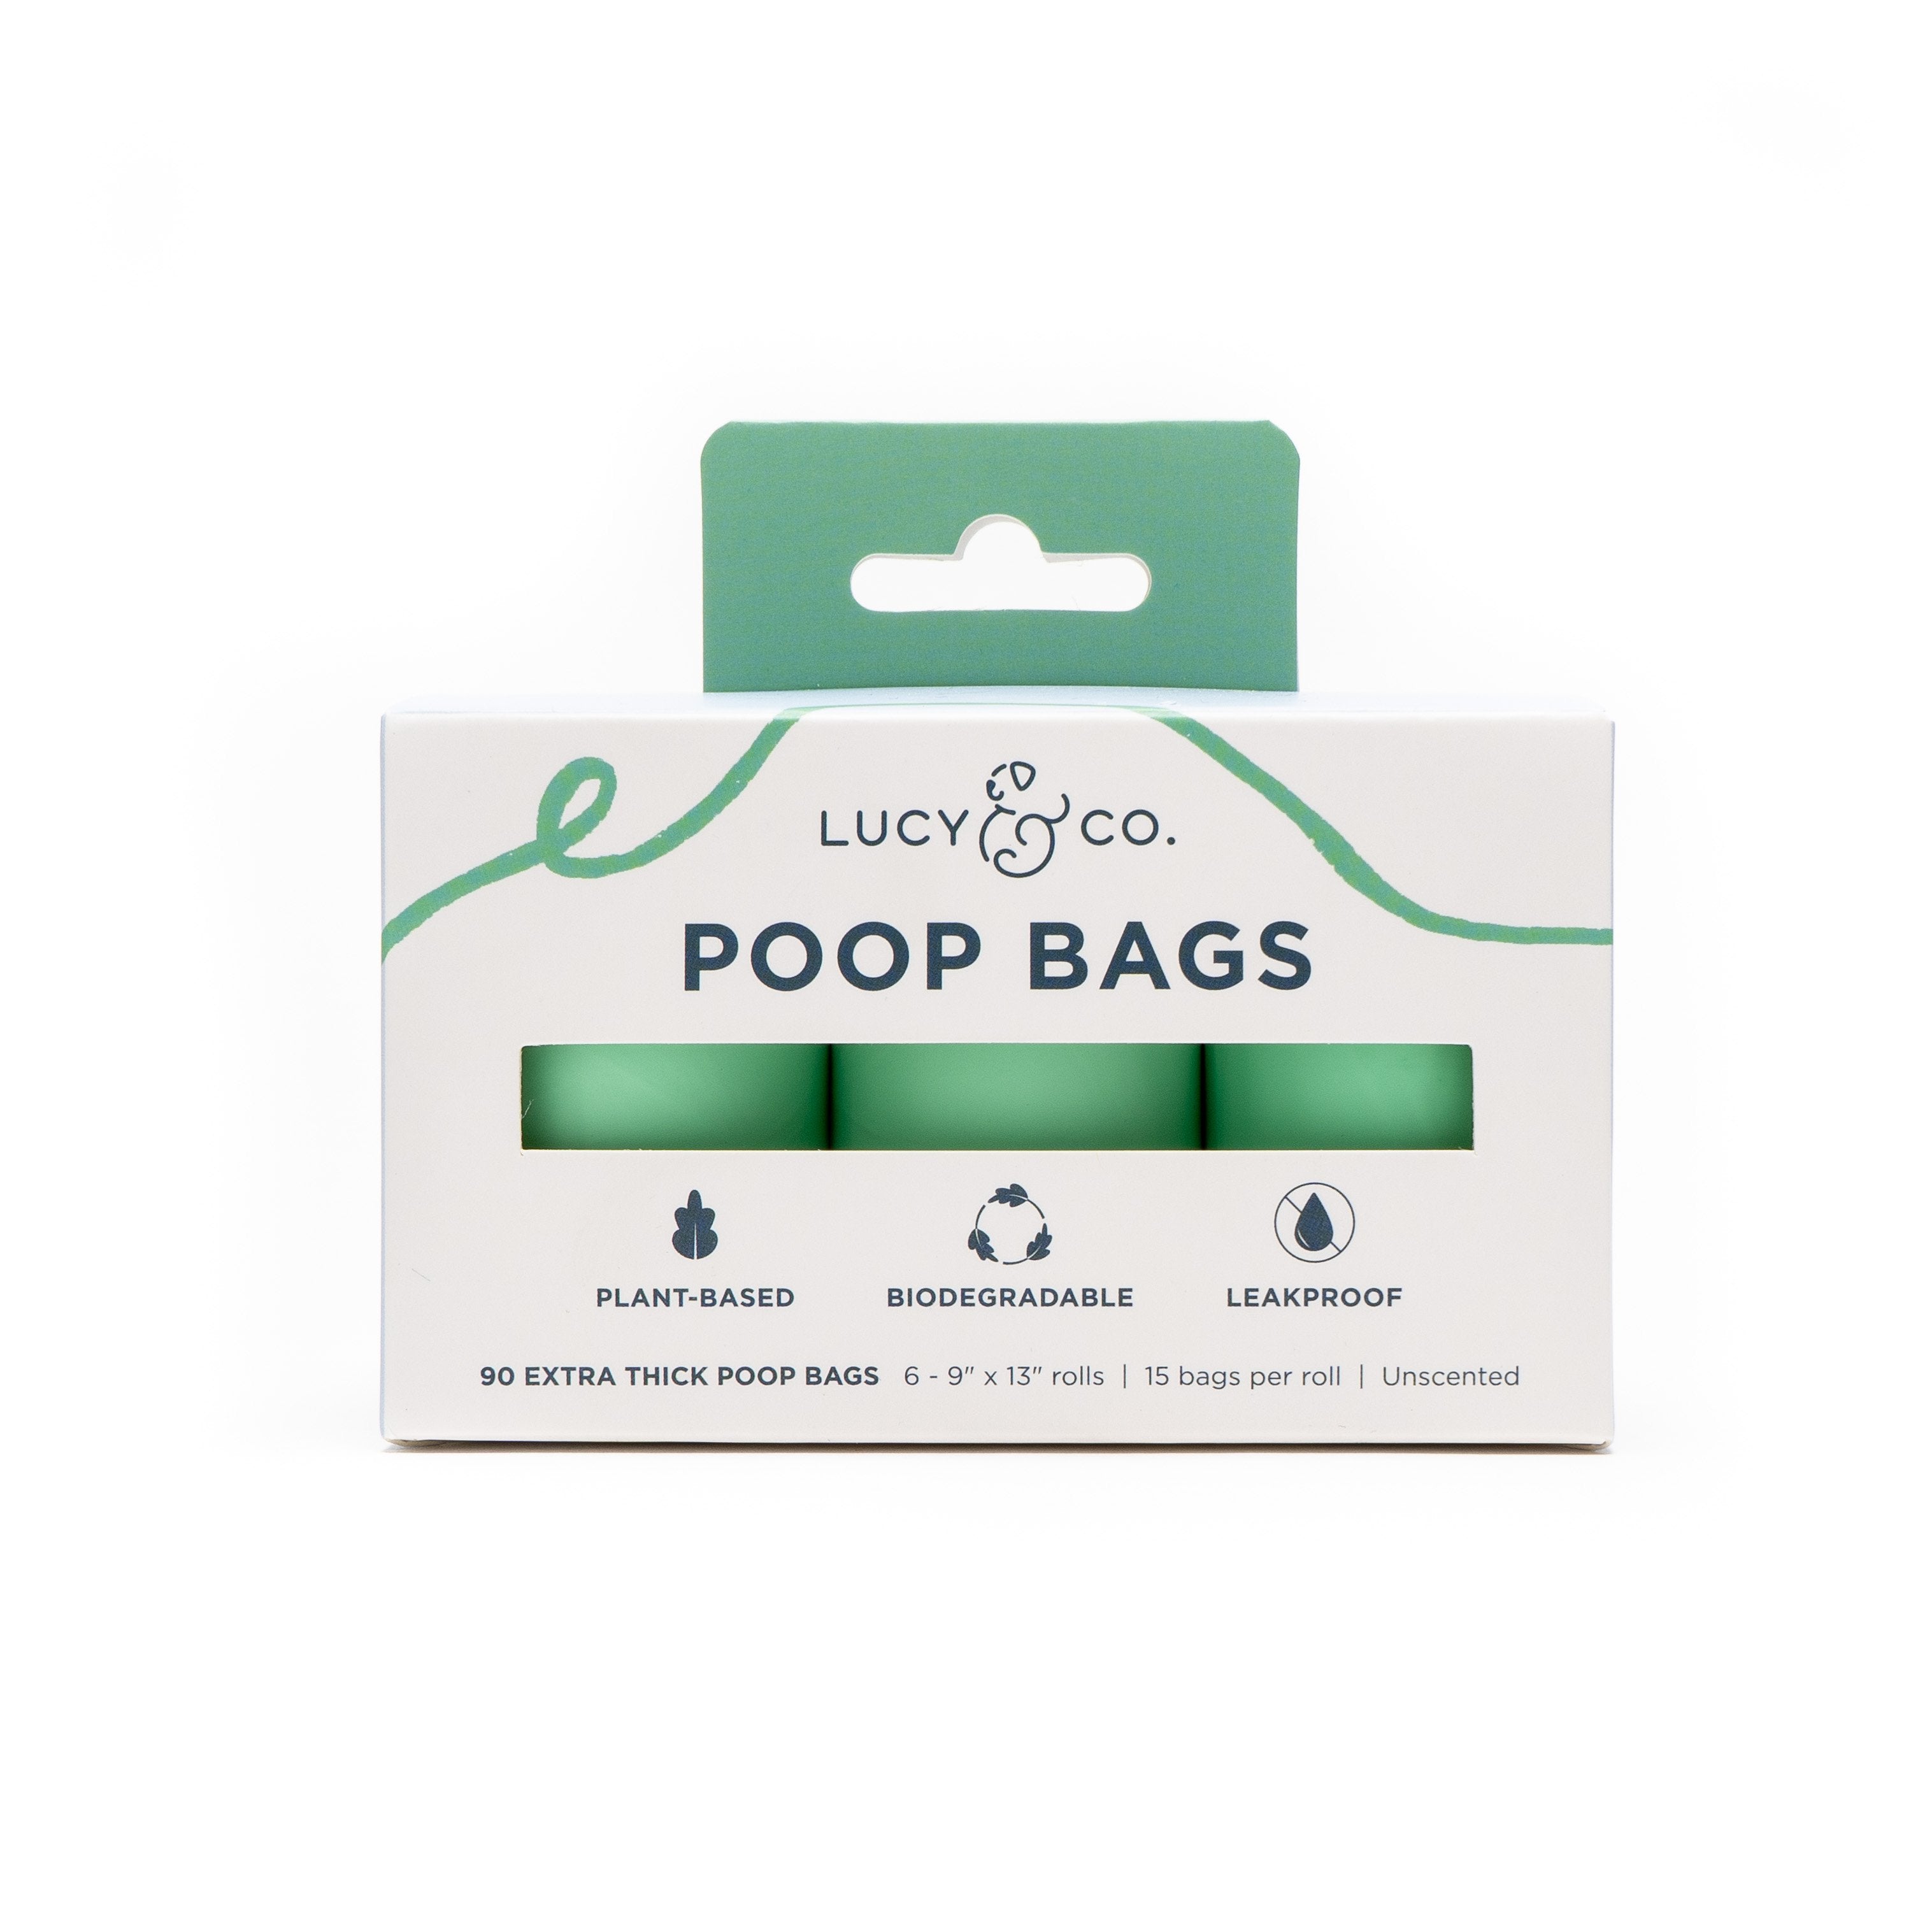 Sir Waggington's Non-Plastic Dog Poop Bags – sirwaggingtons